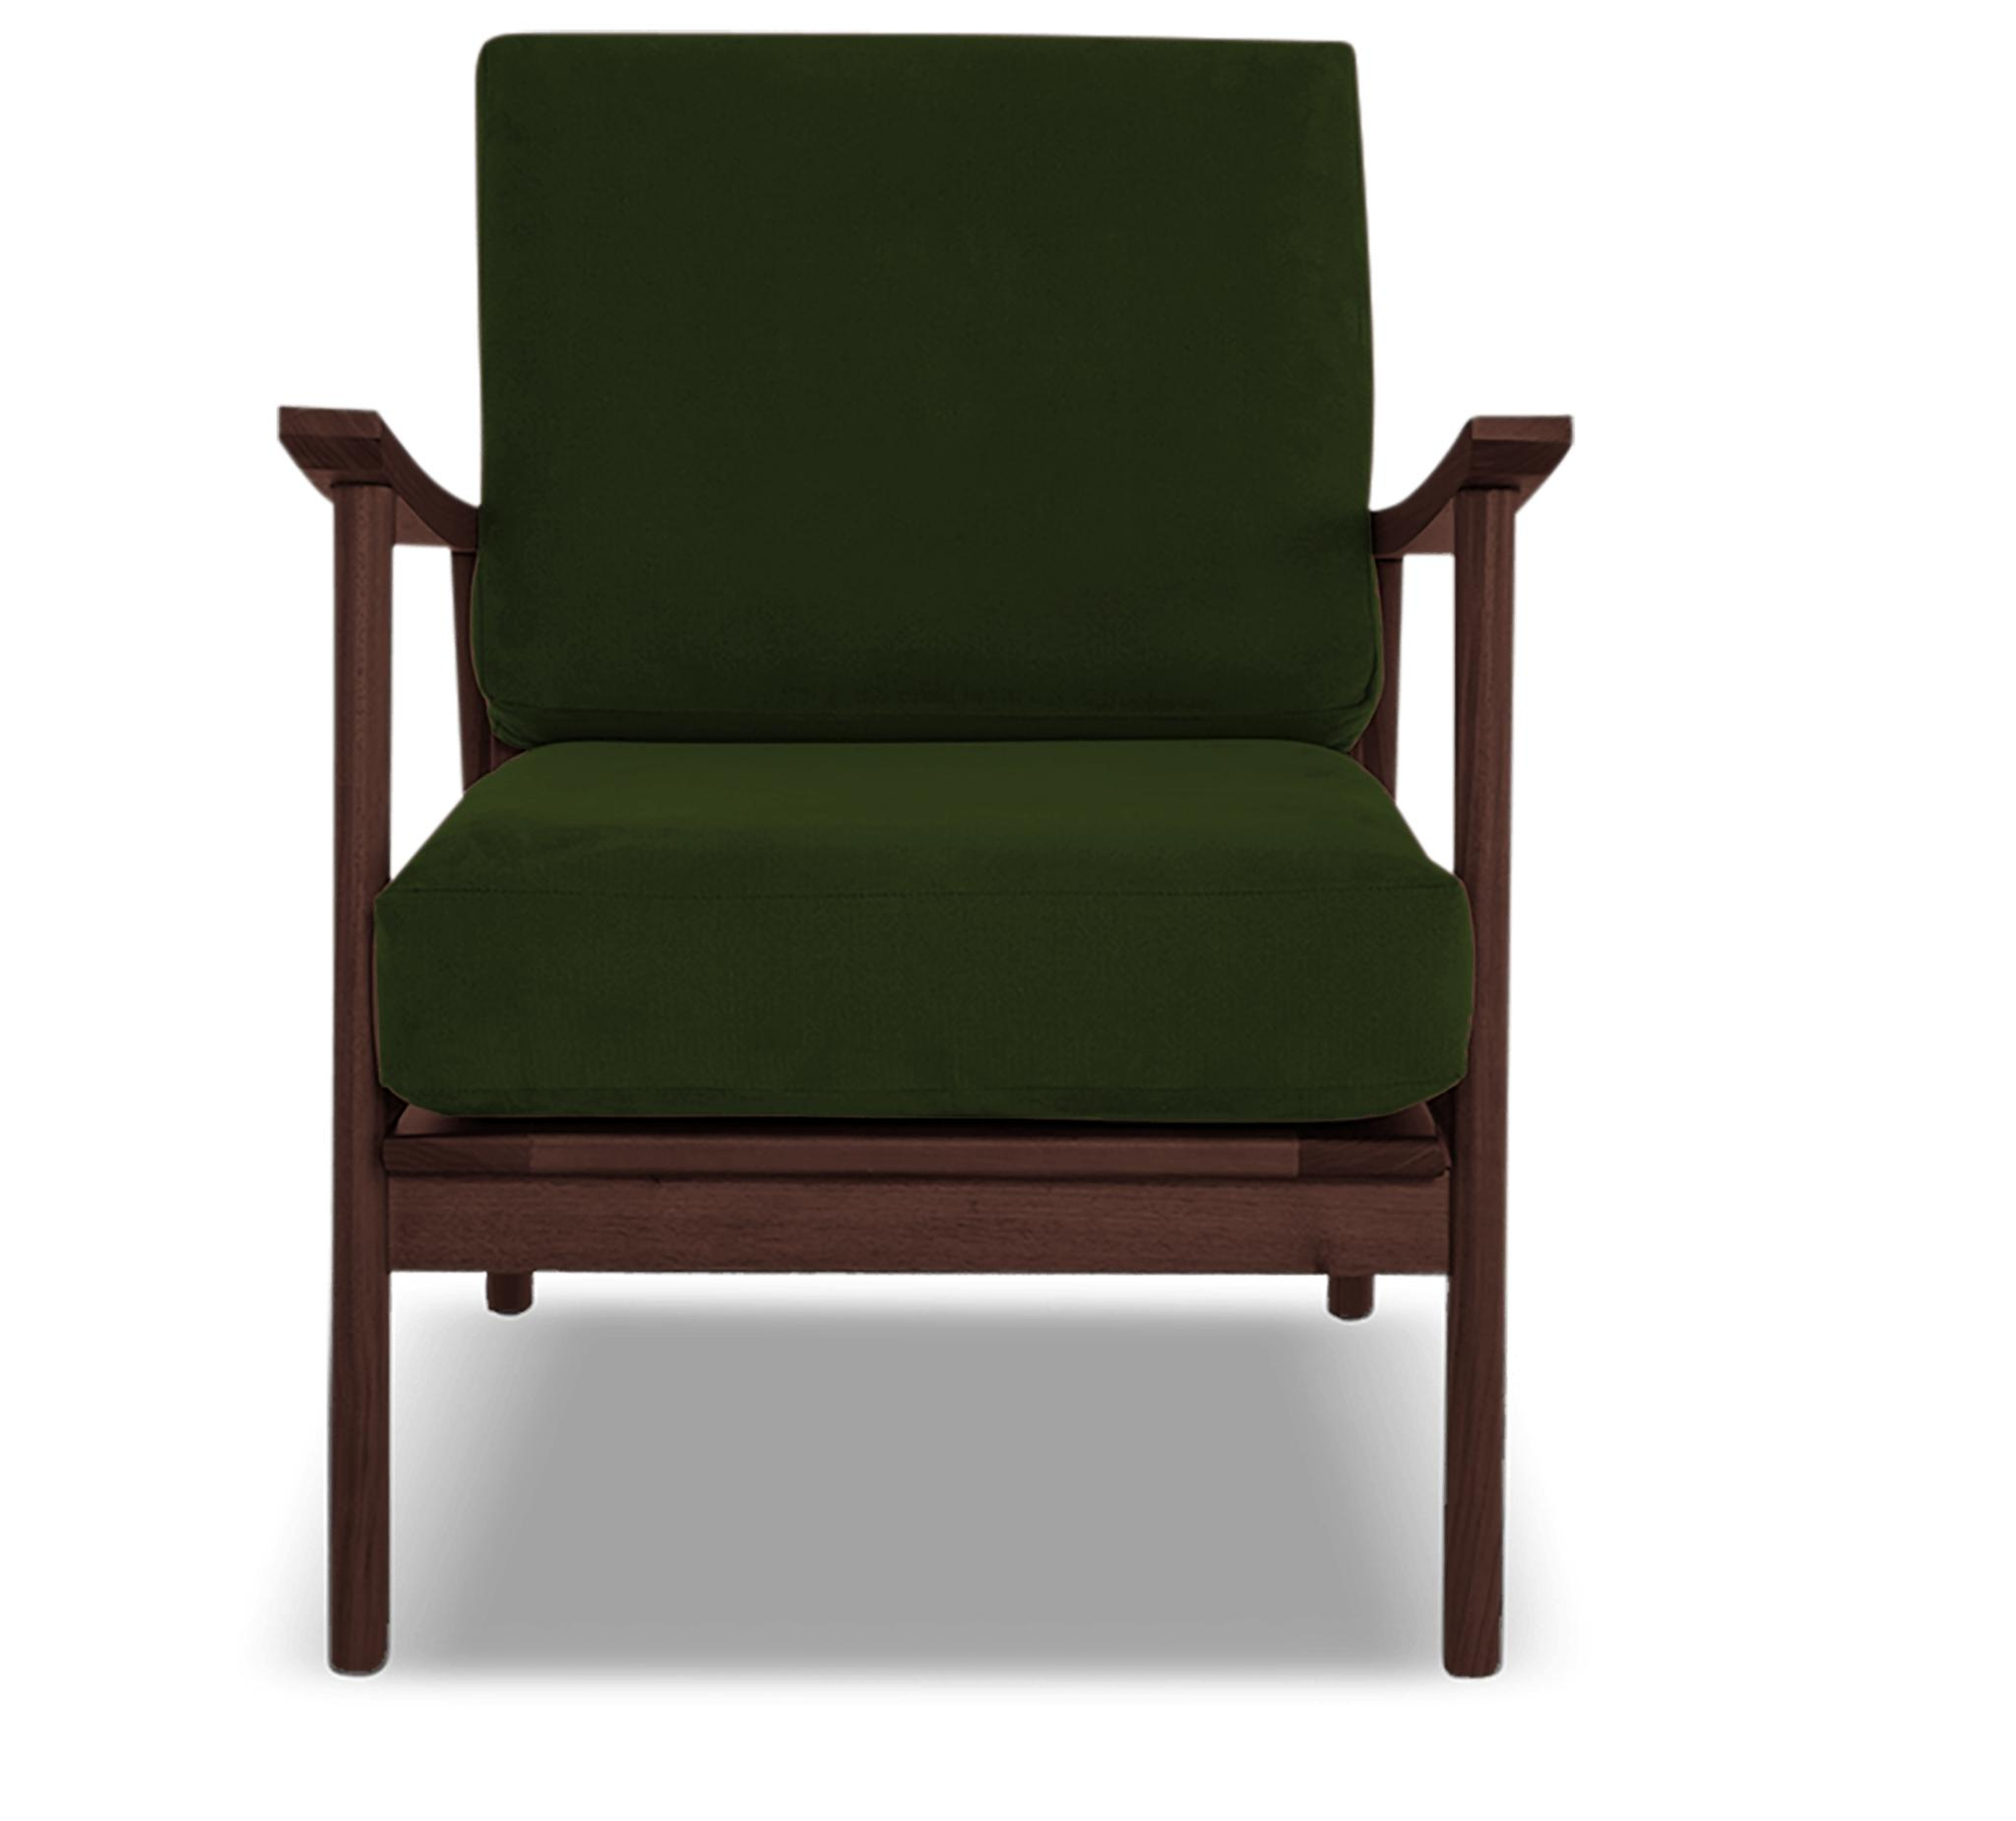 Green Paley Mid Century Modern Chair - Royale Forest - Walnut - Joybird